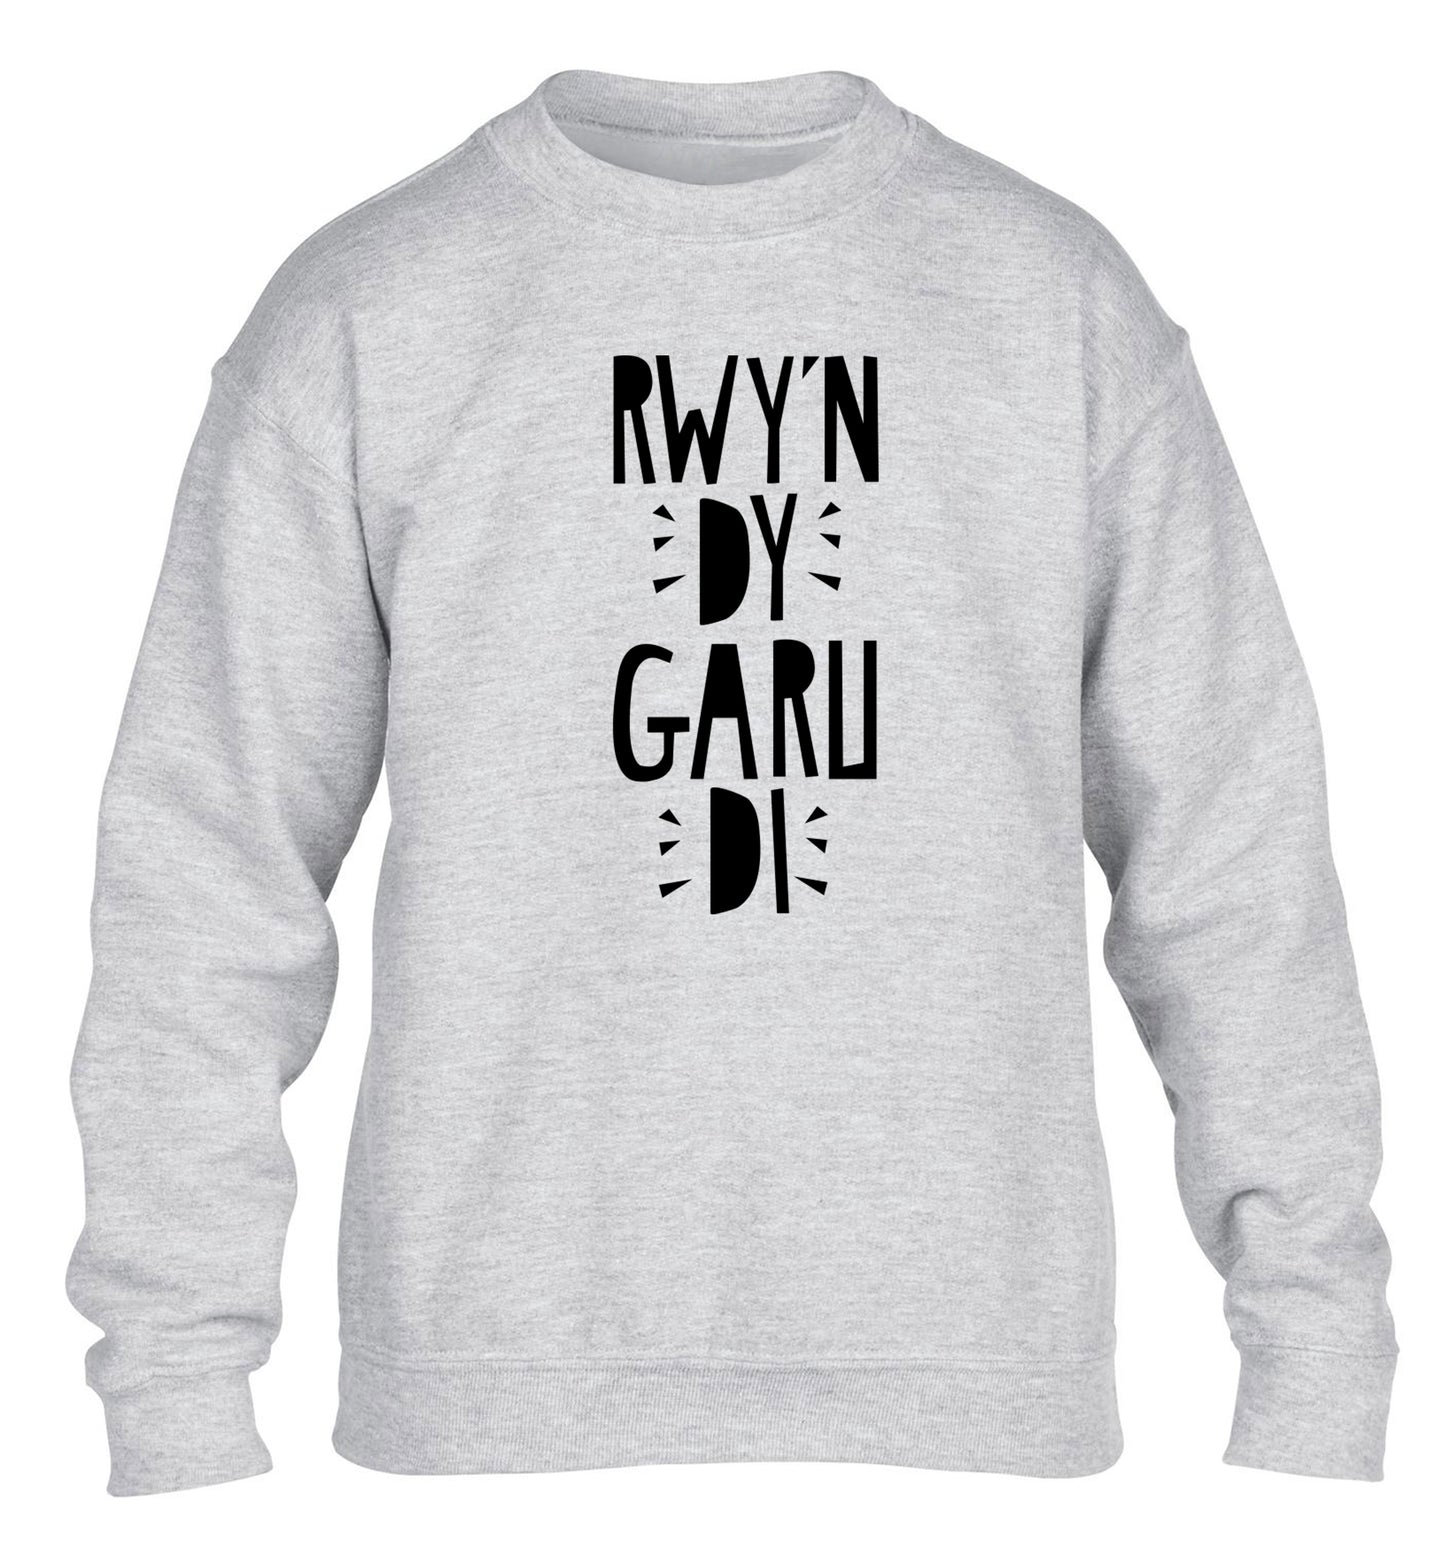 Rwy'n dy garu di - I love you children's grey sweater 12-13 Years